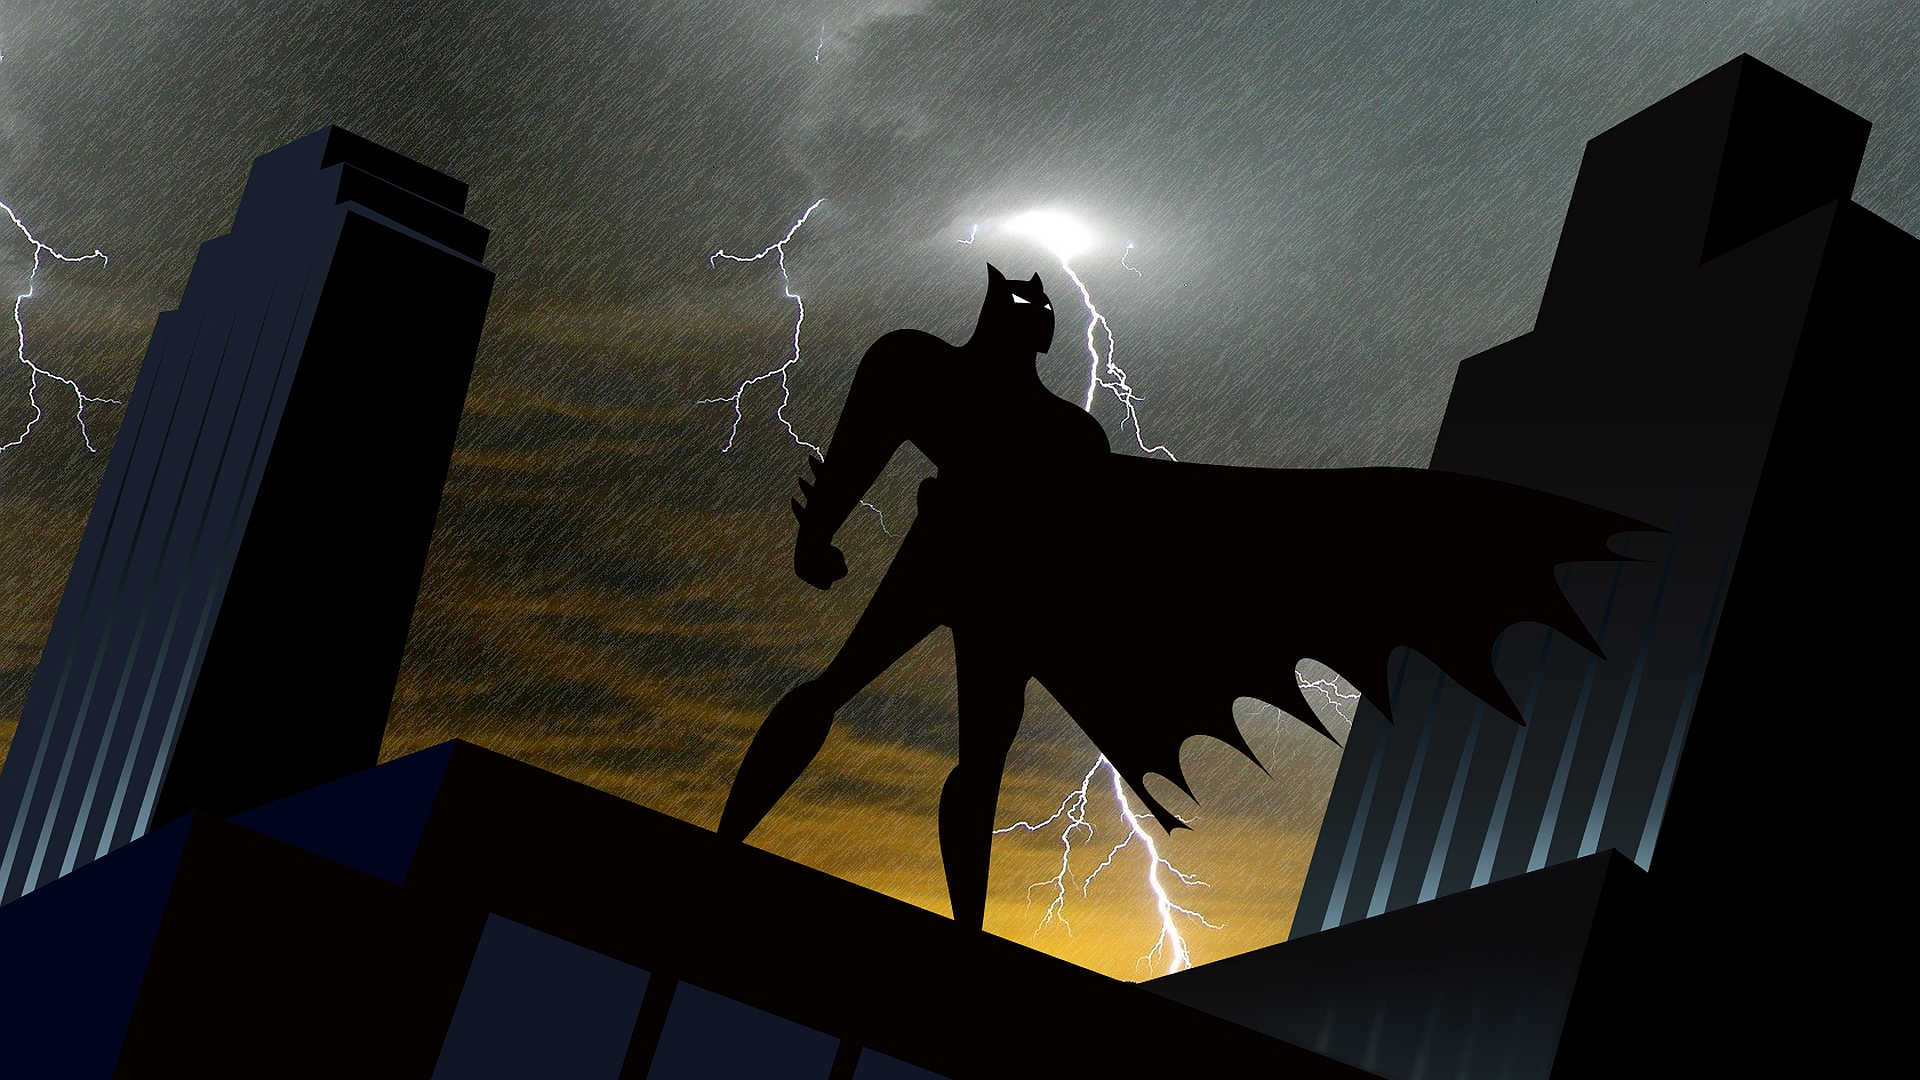 Batman The Animated Series wallpaper   1265317